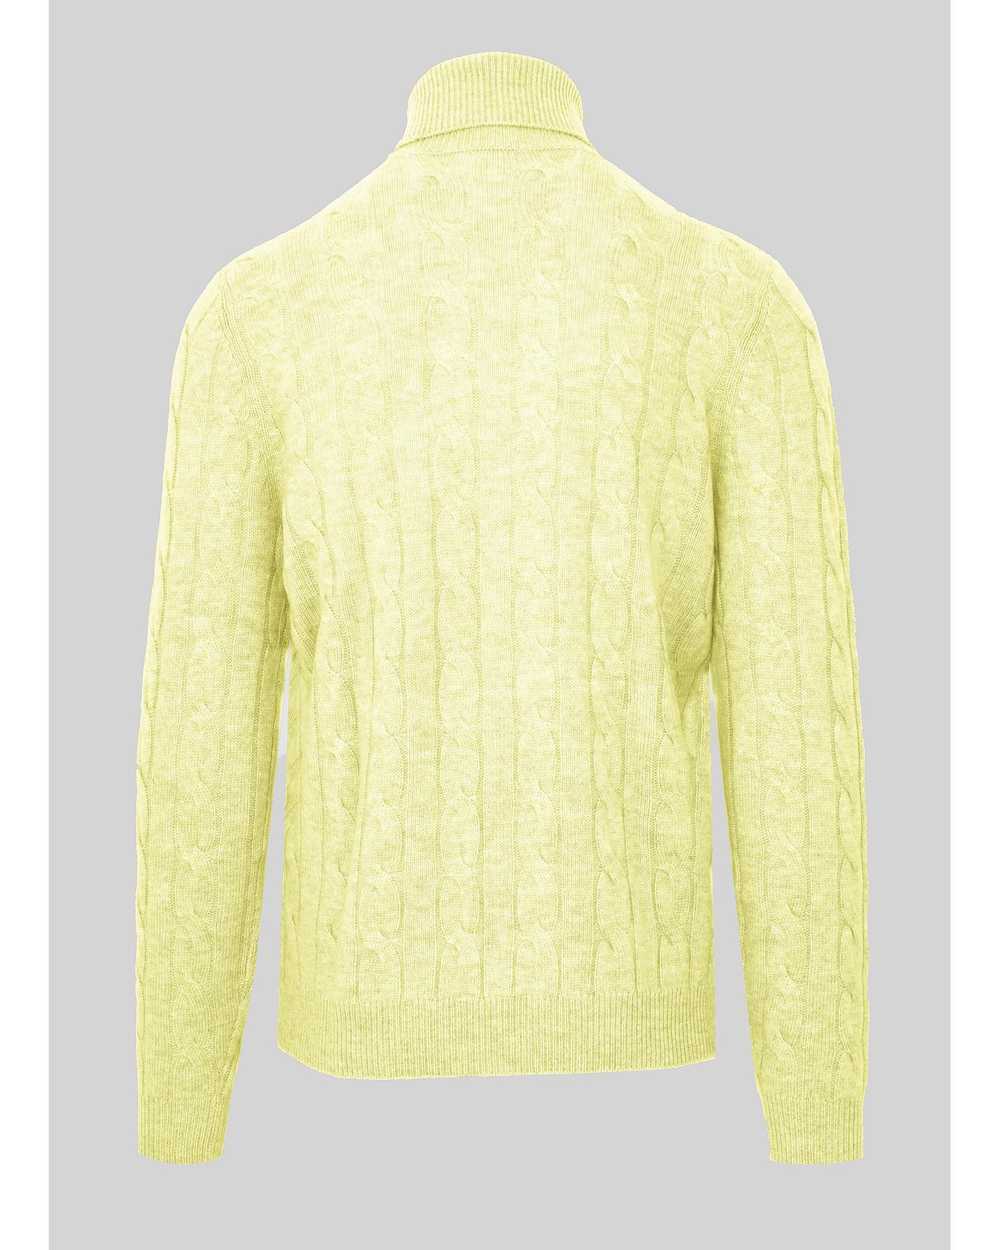 Malo Wool-Cashmere Turtleneck Sweater - image 2